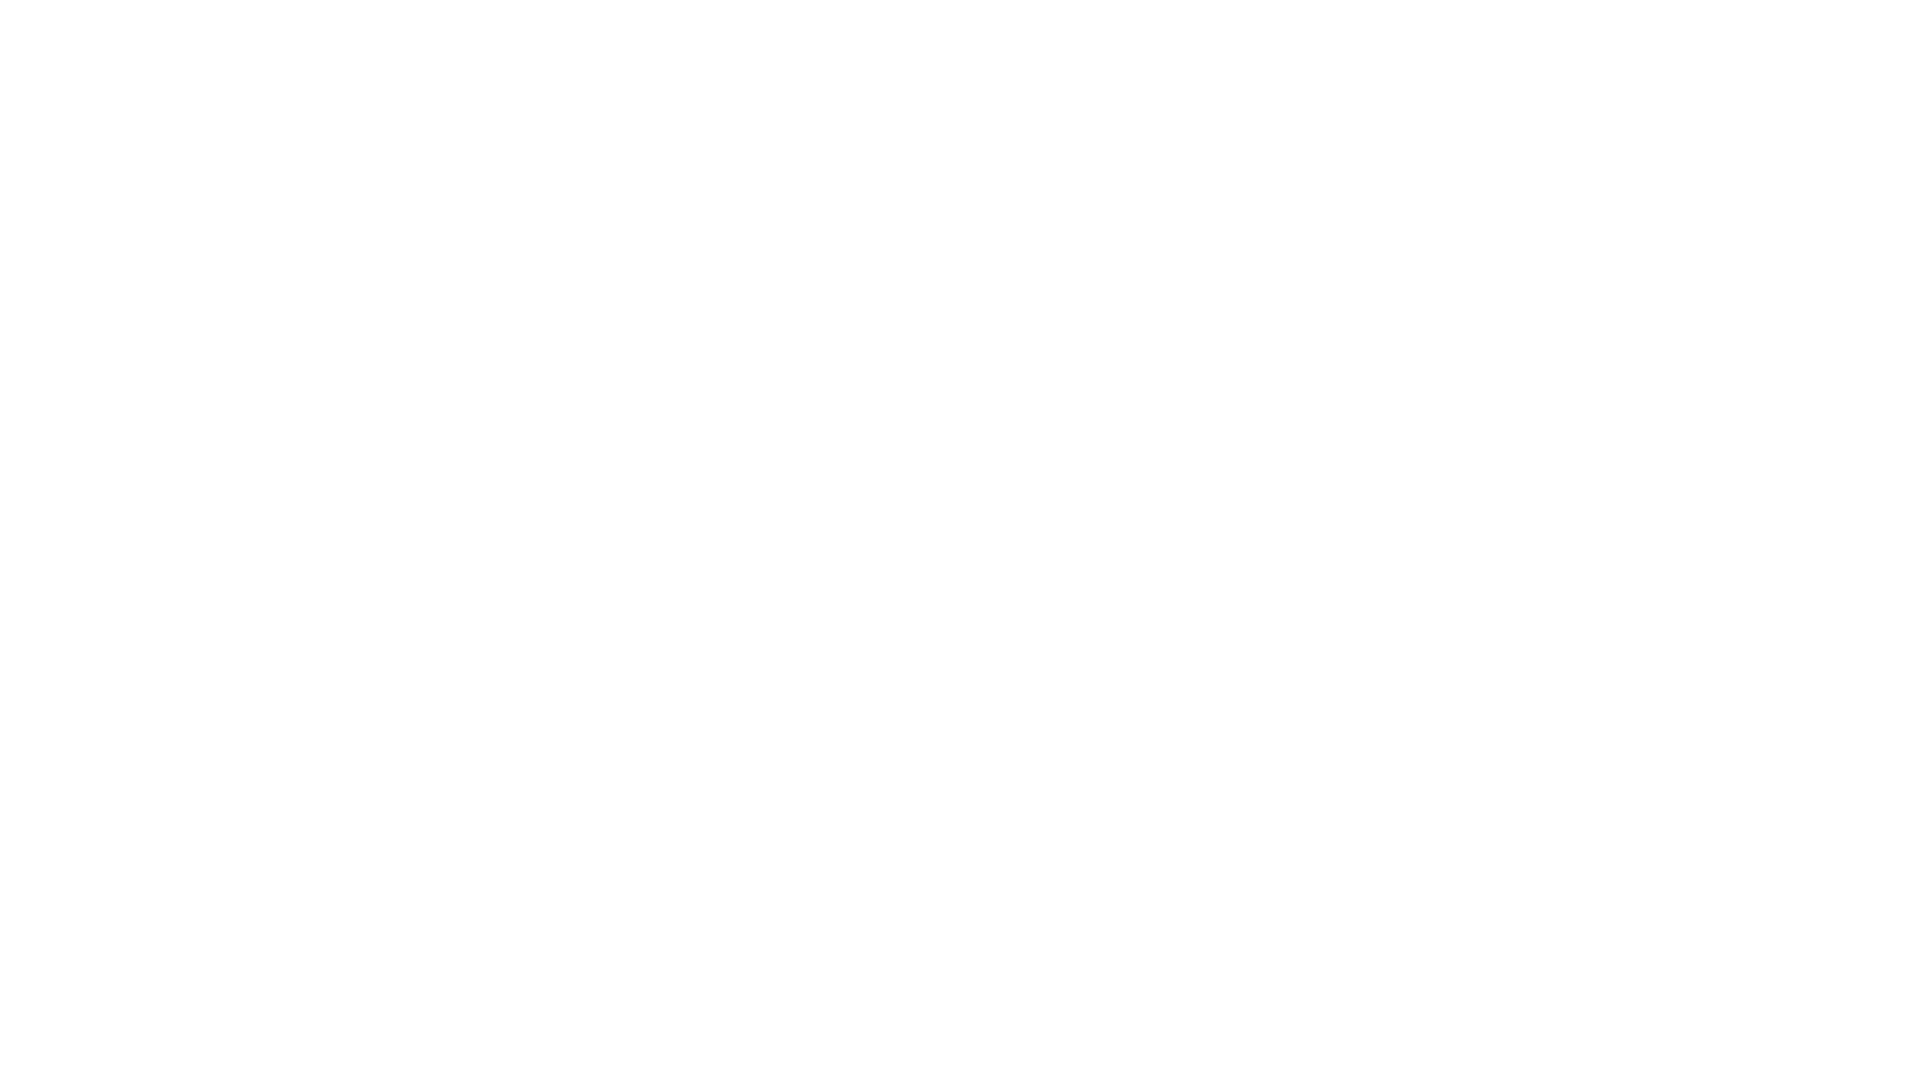 Rocky Cascolan - audio / video / media